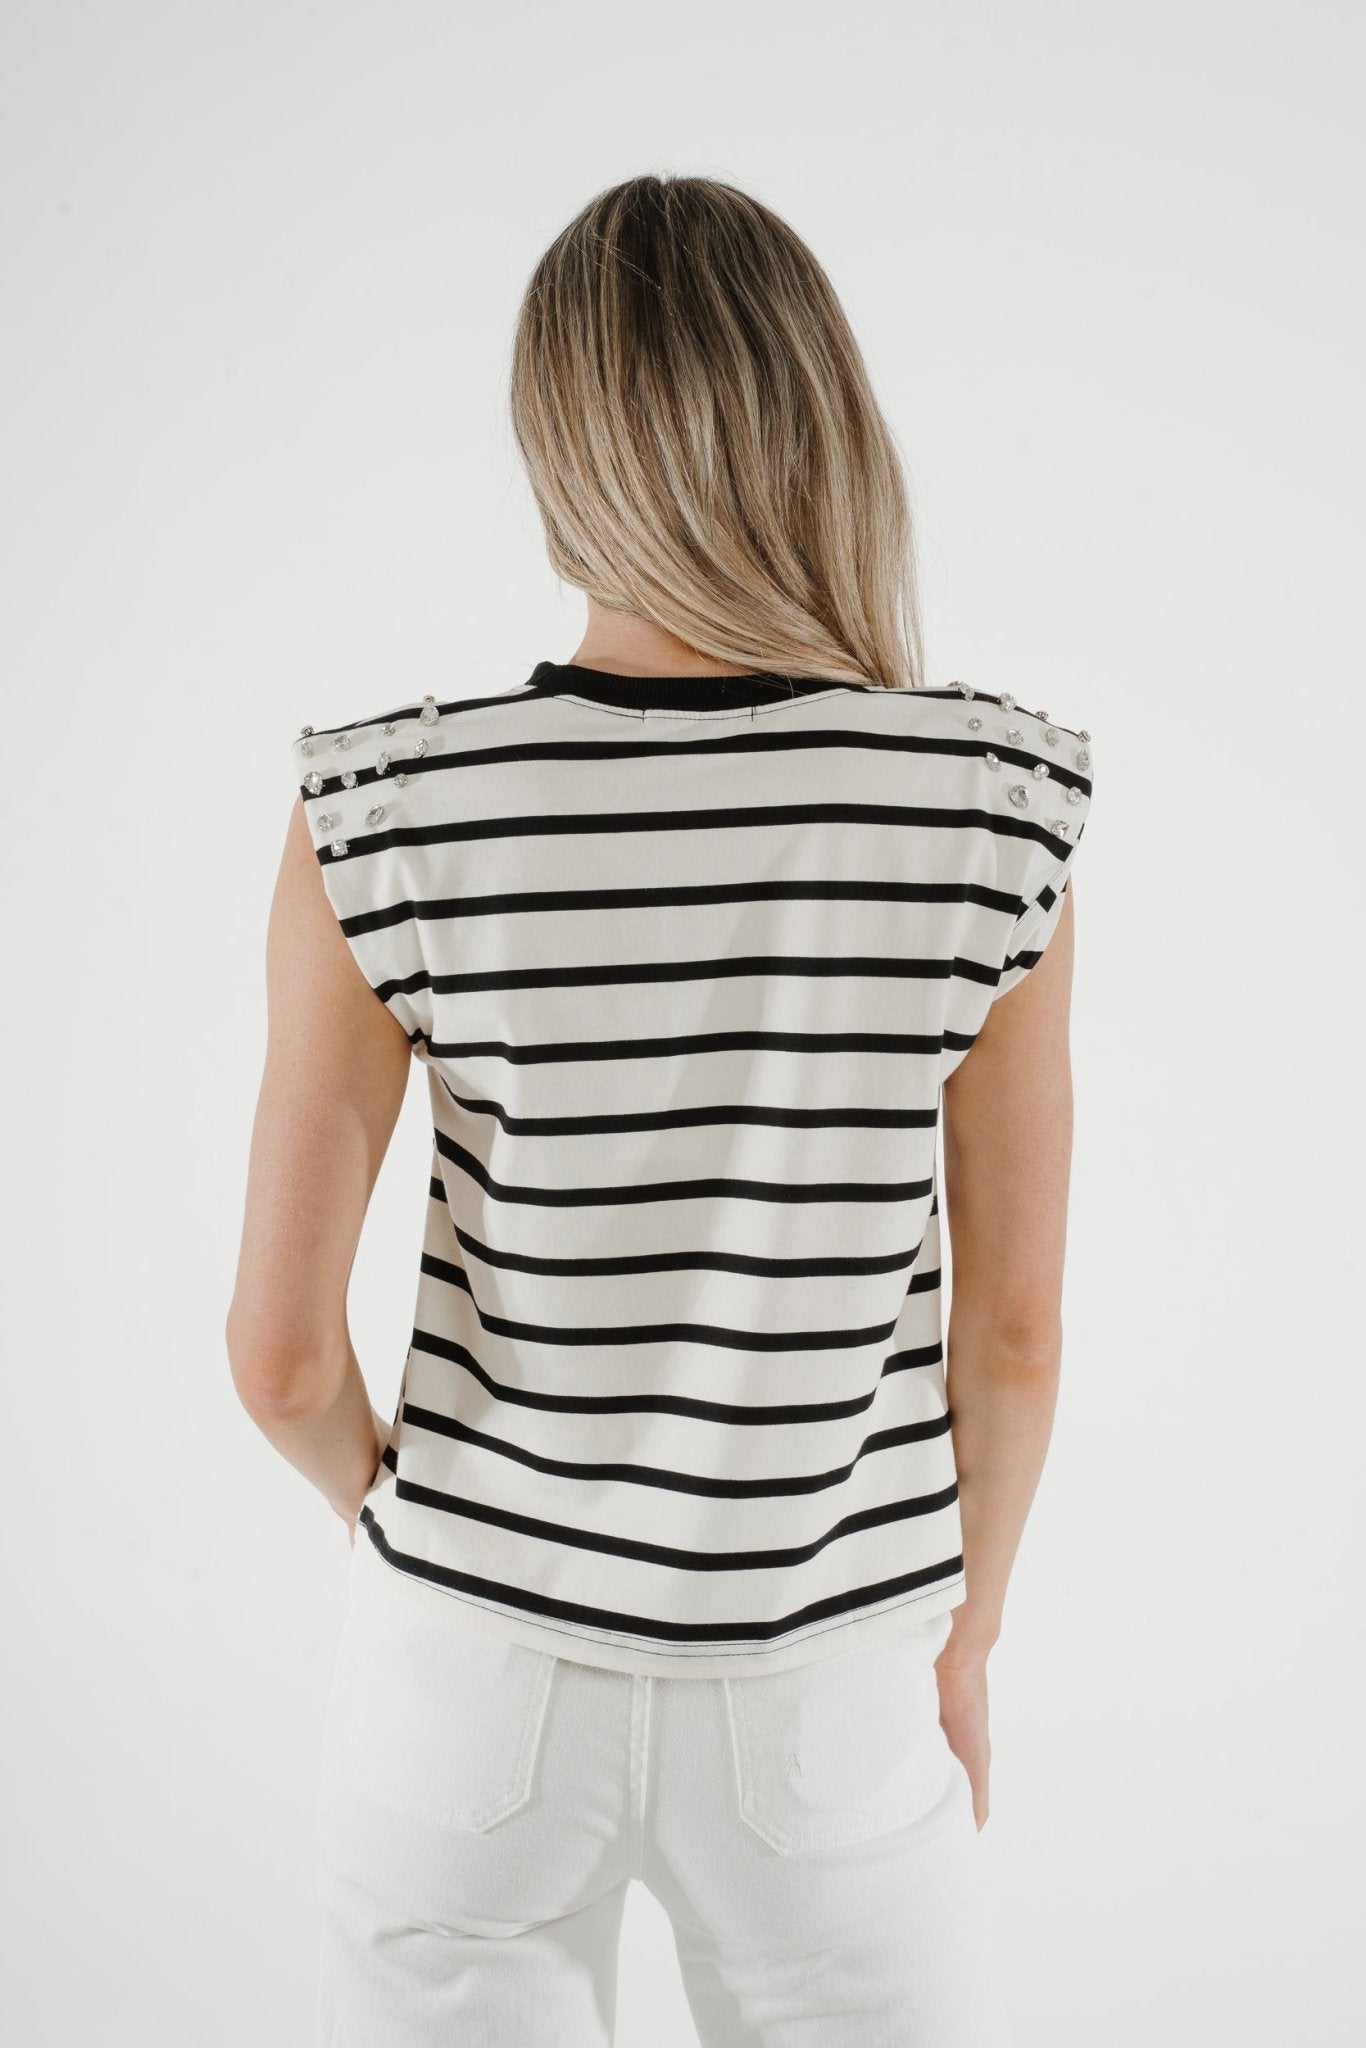 Millie Diamanté Stripe T-Shirt In Monochrome - The Walk in Wardrobe